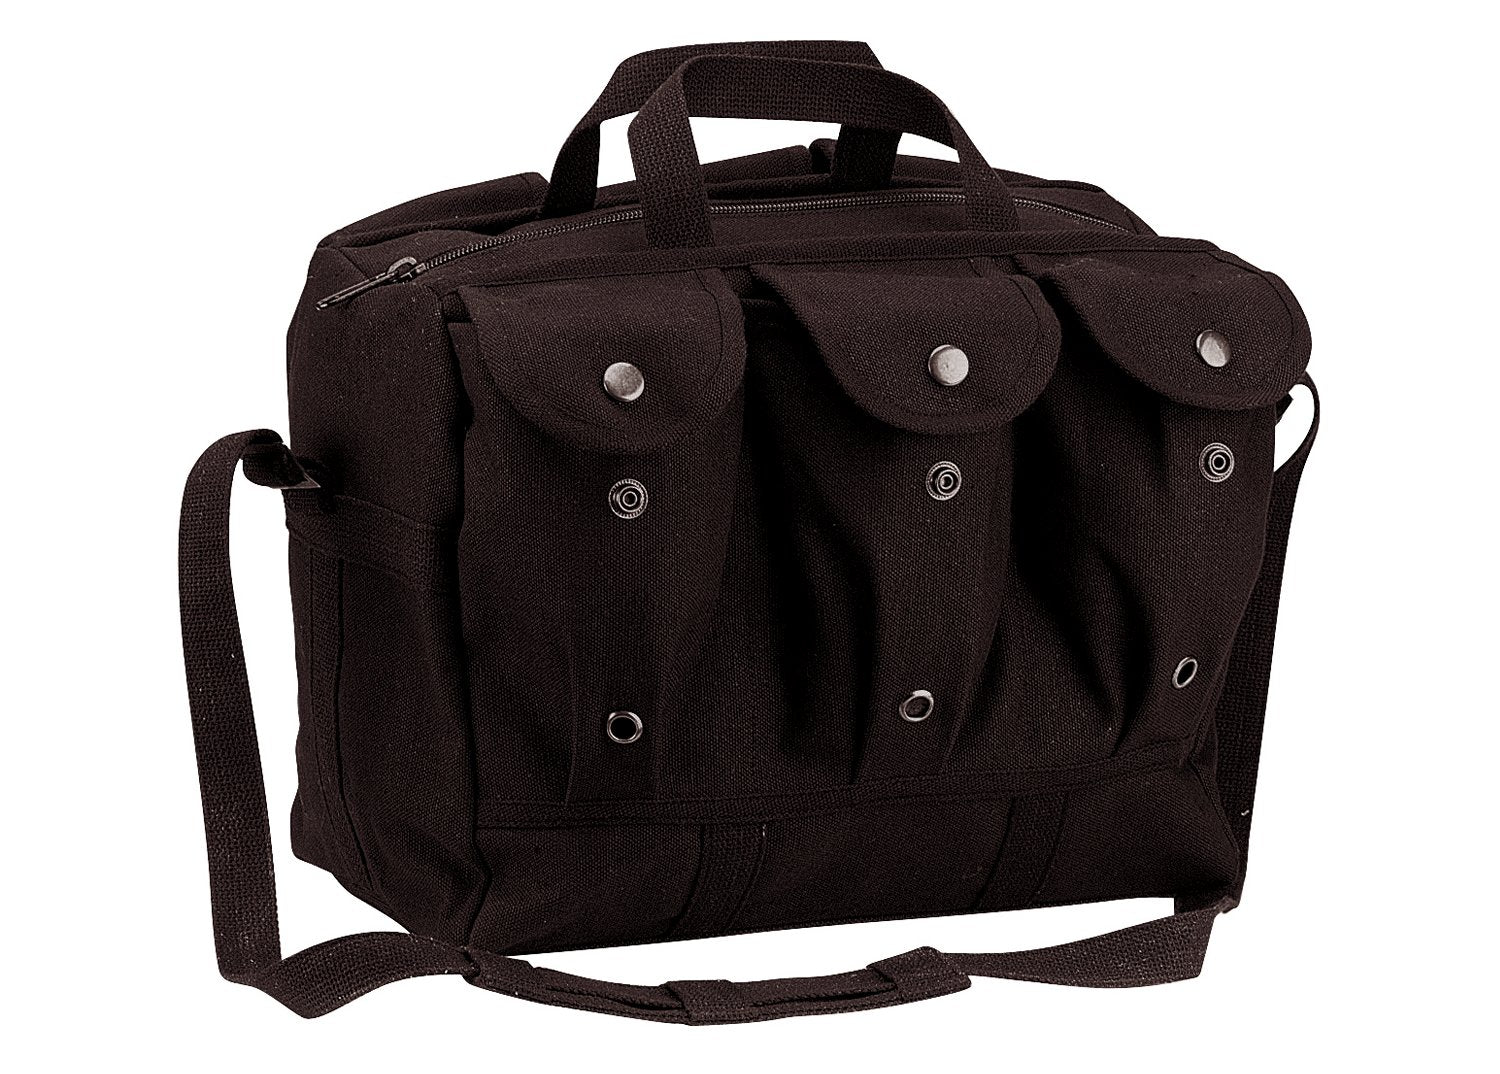 Canvas Medical Equipment Bag - Tactical Choice Plus